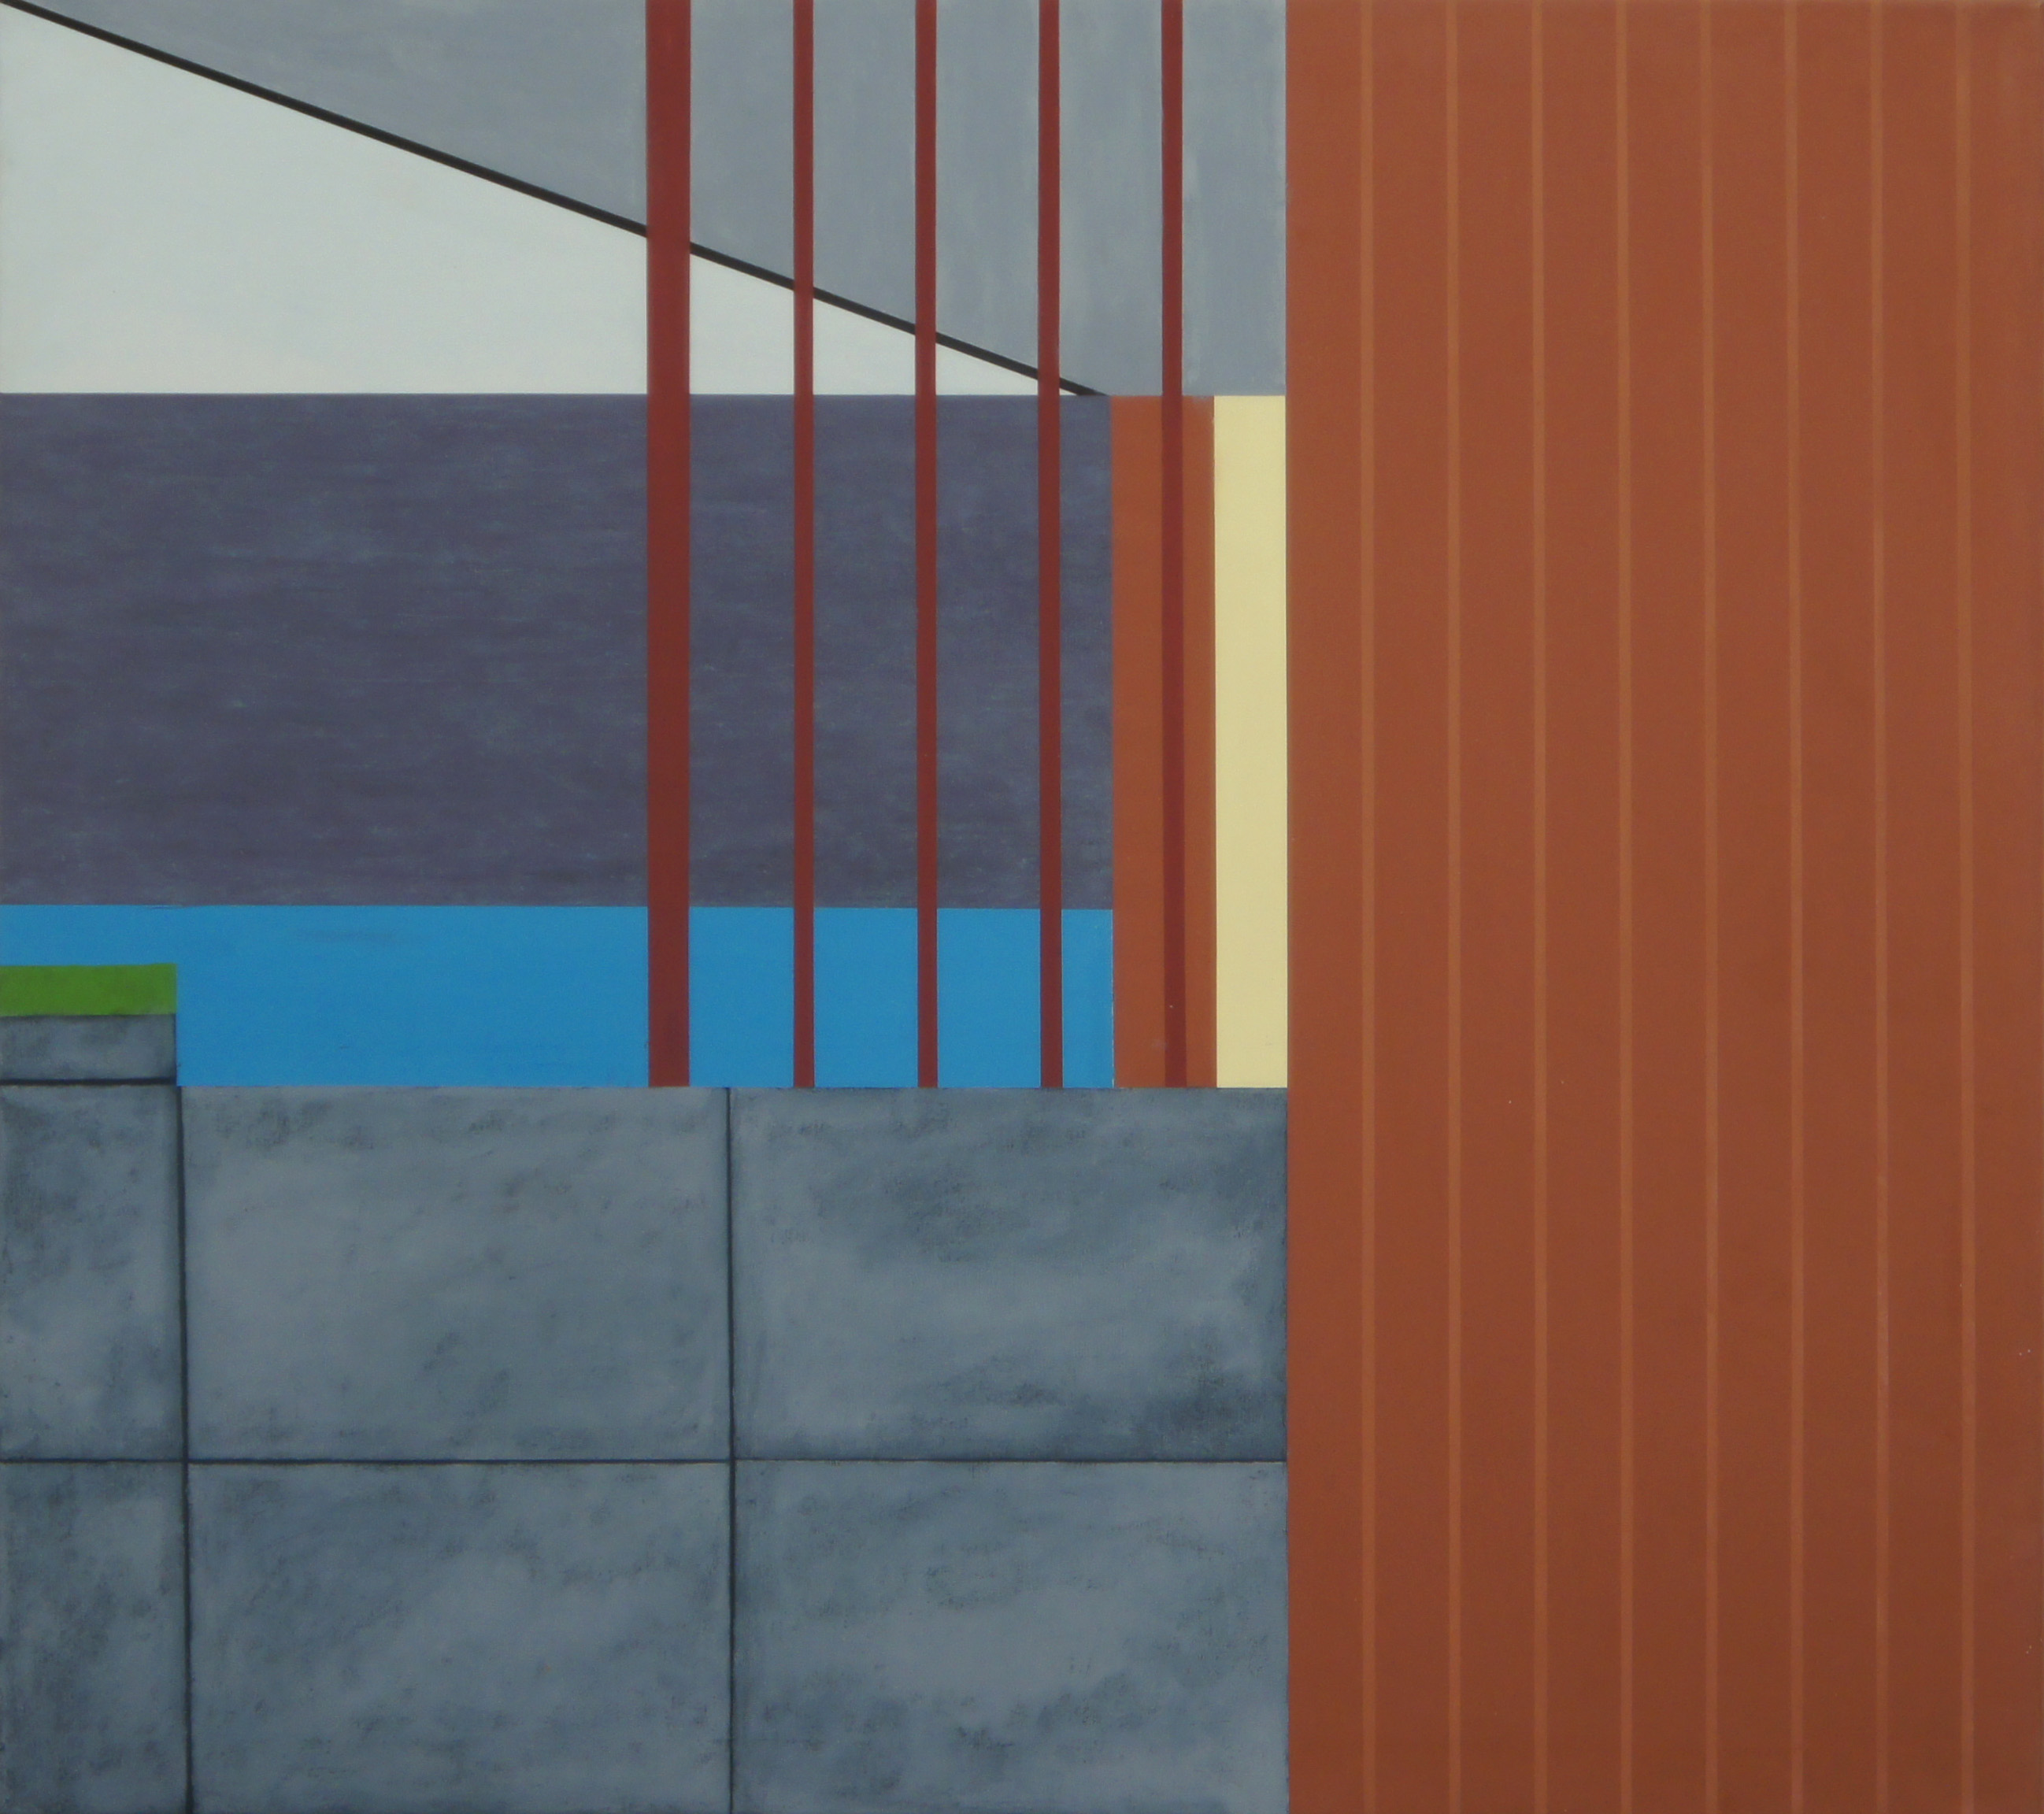 In Tone/Japan, 2010, 90 x 100 cm, Ölfarbe auf Leinwand In Tone/Japan, 2010, 90 x 100 cm, Oil on canvas